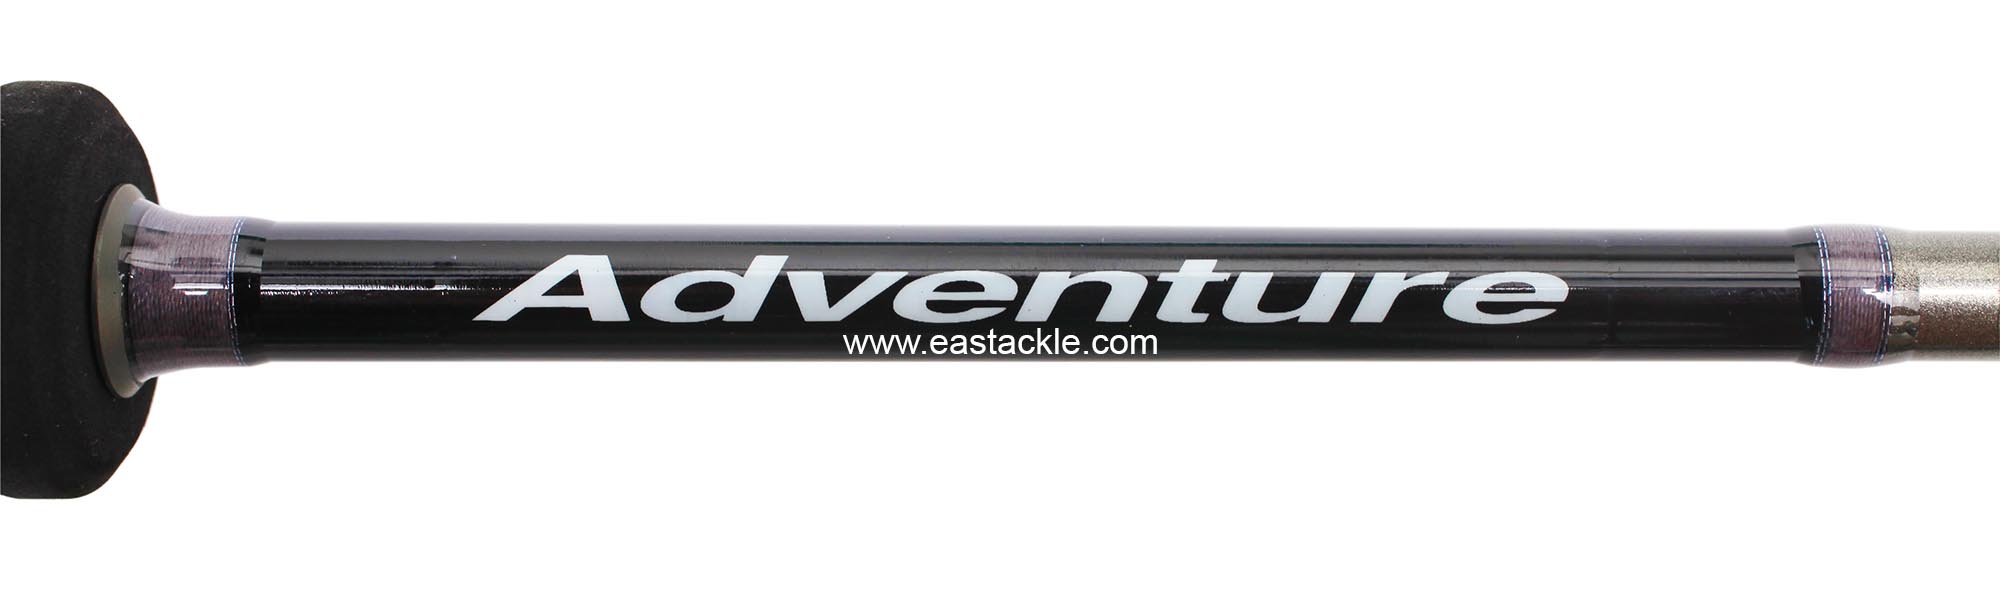 Storm - Adventure - Spinning Rods - Logo | Eastackle